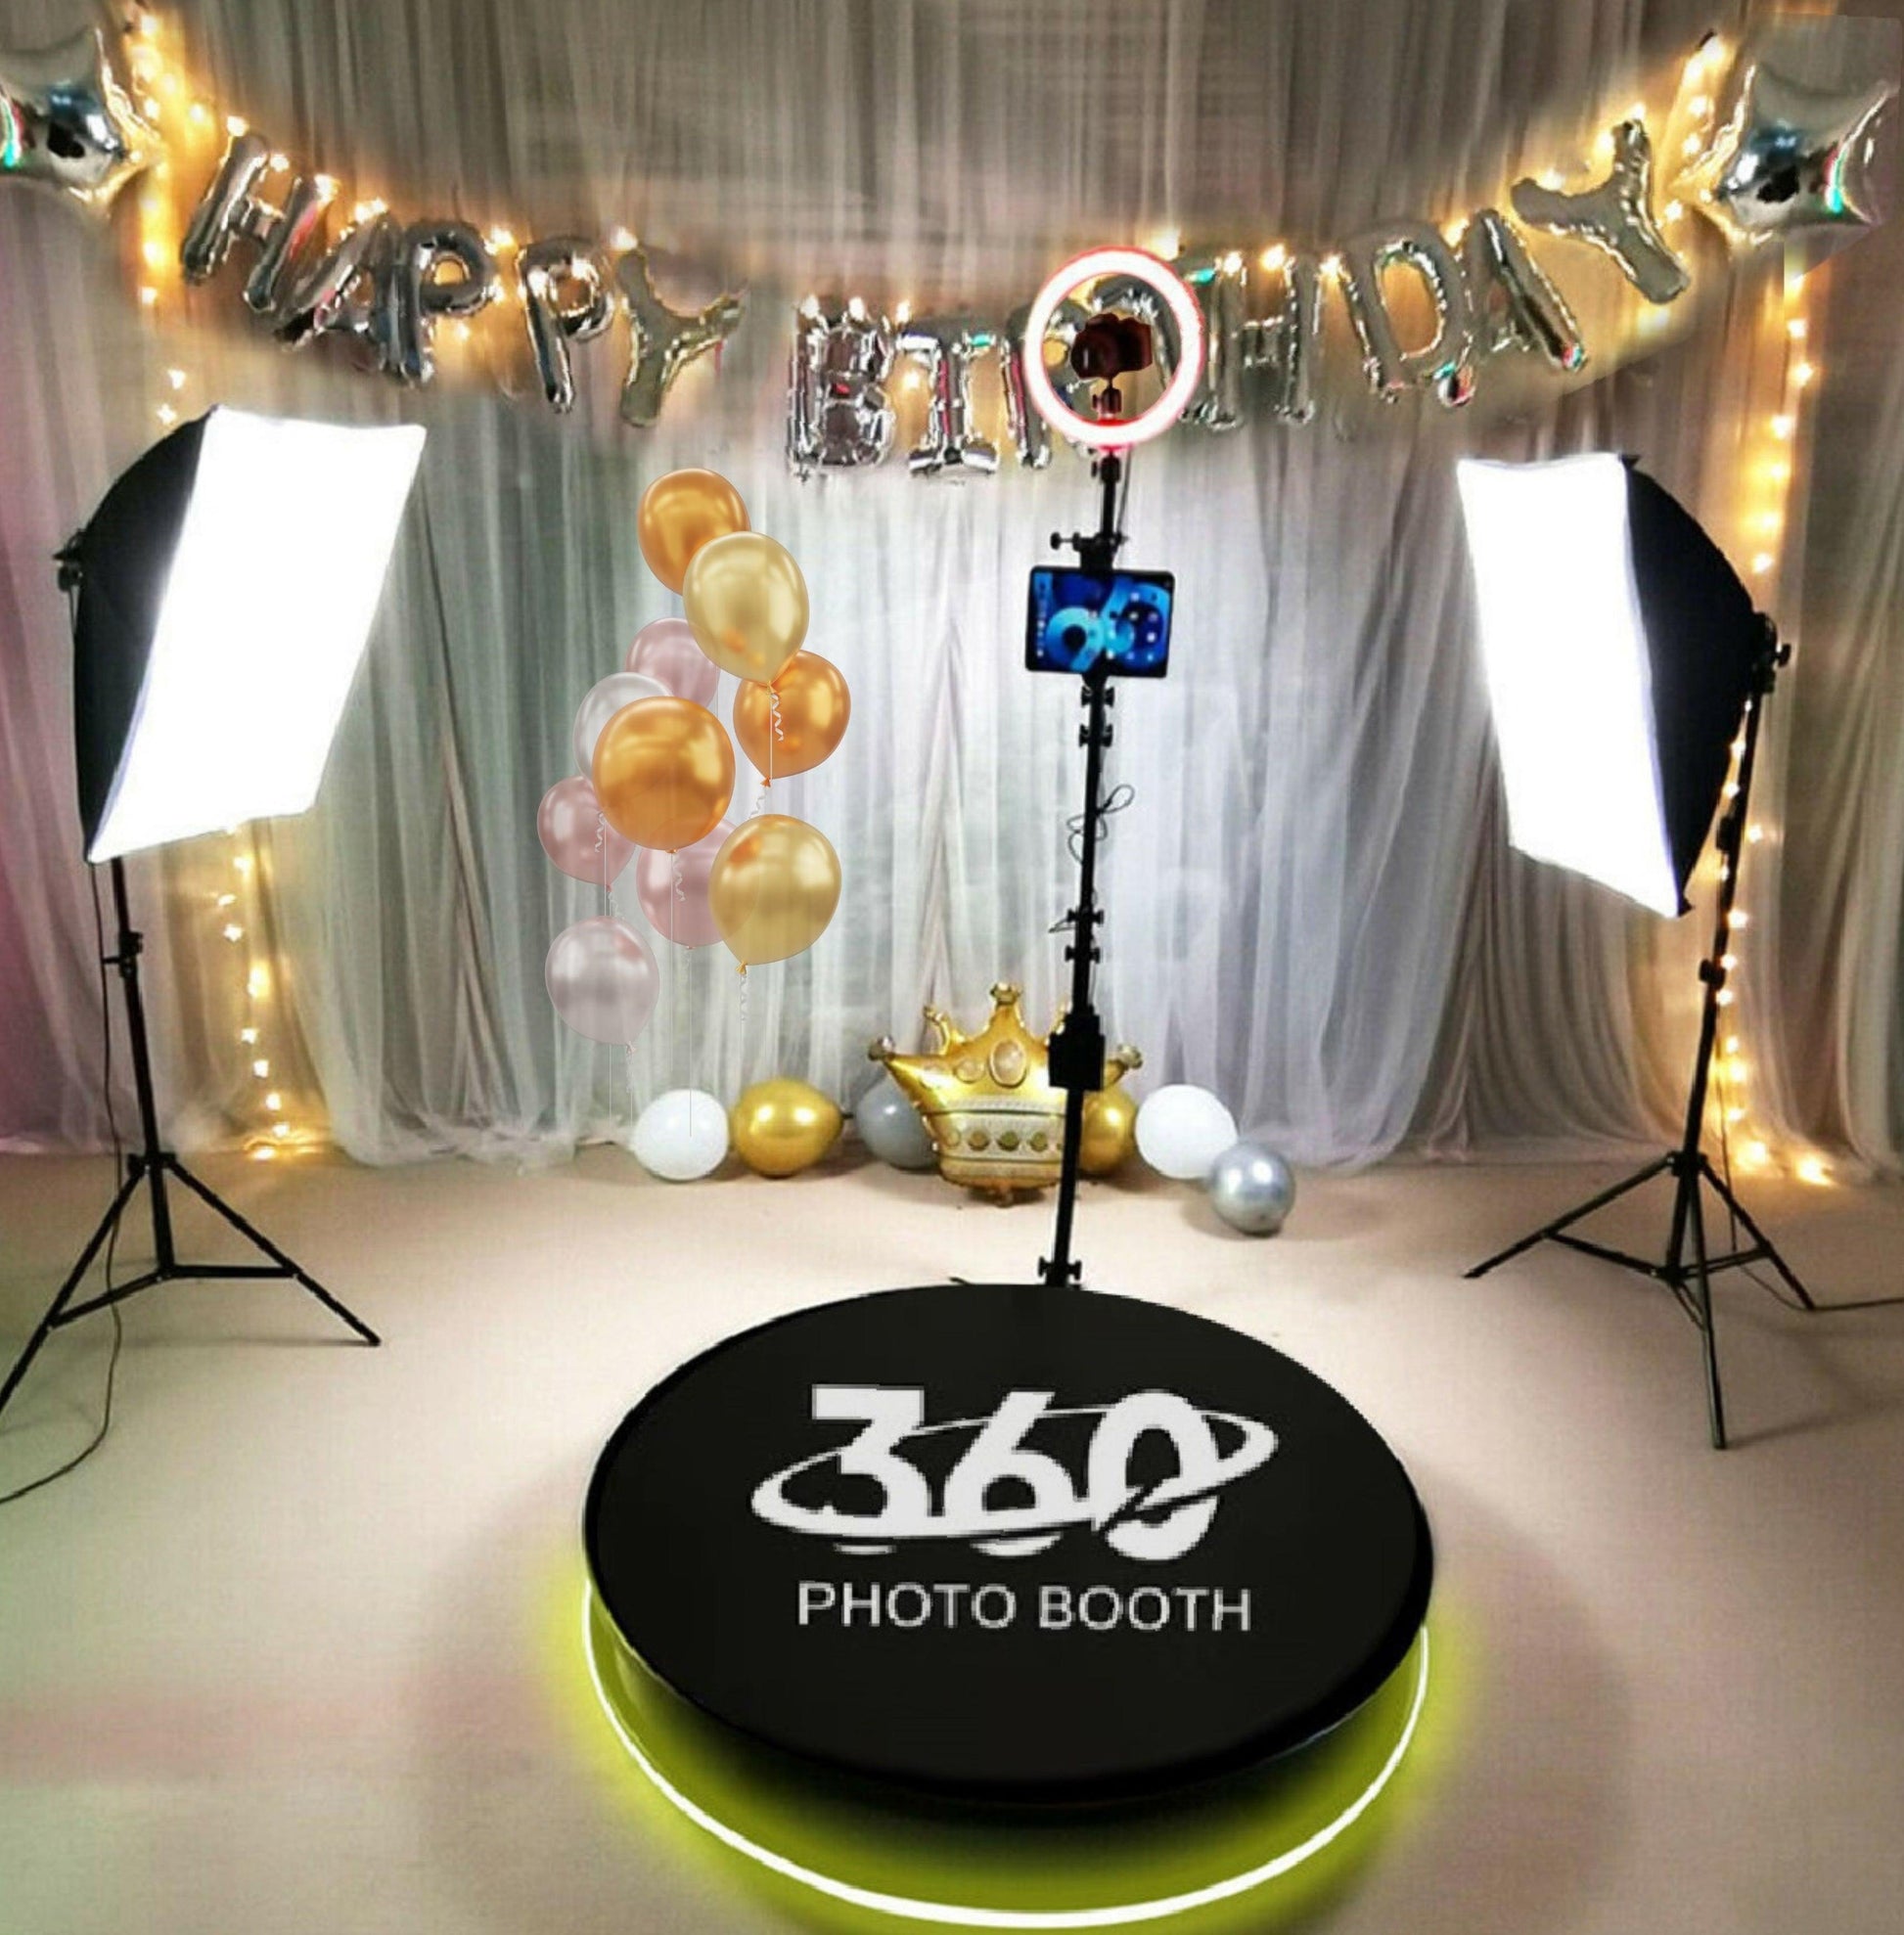 360 Photo Booth with soft box lights setup